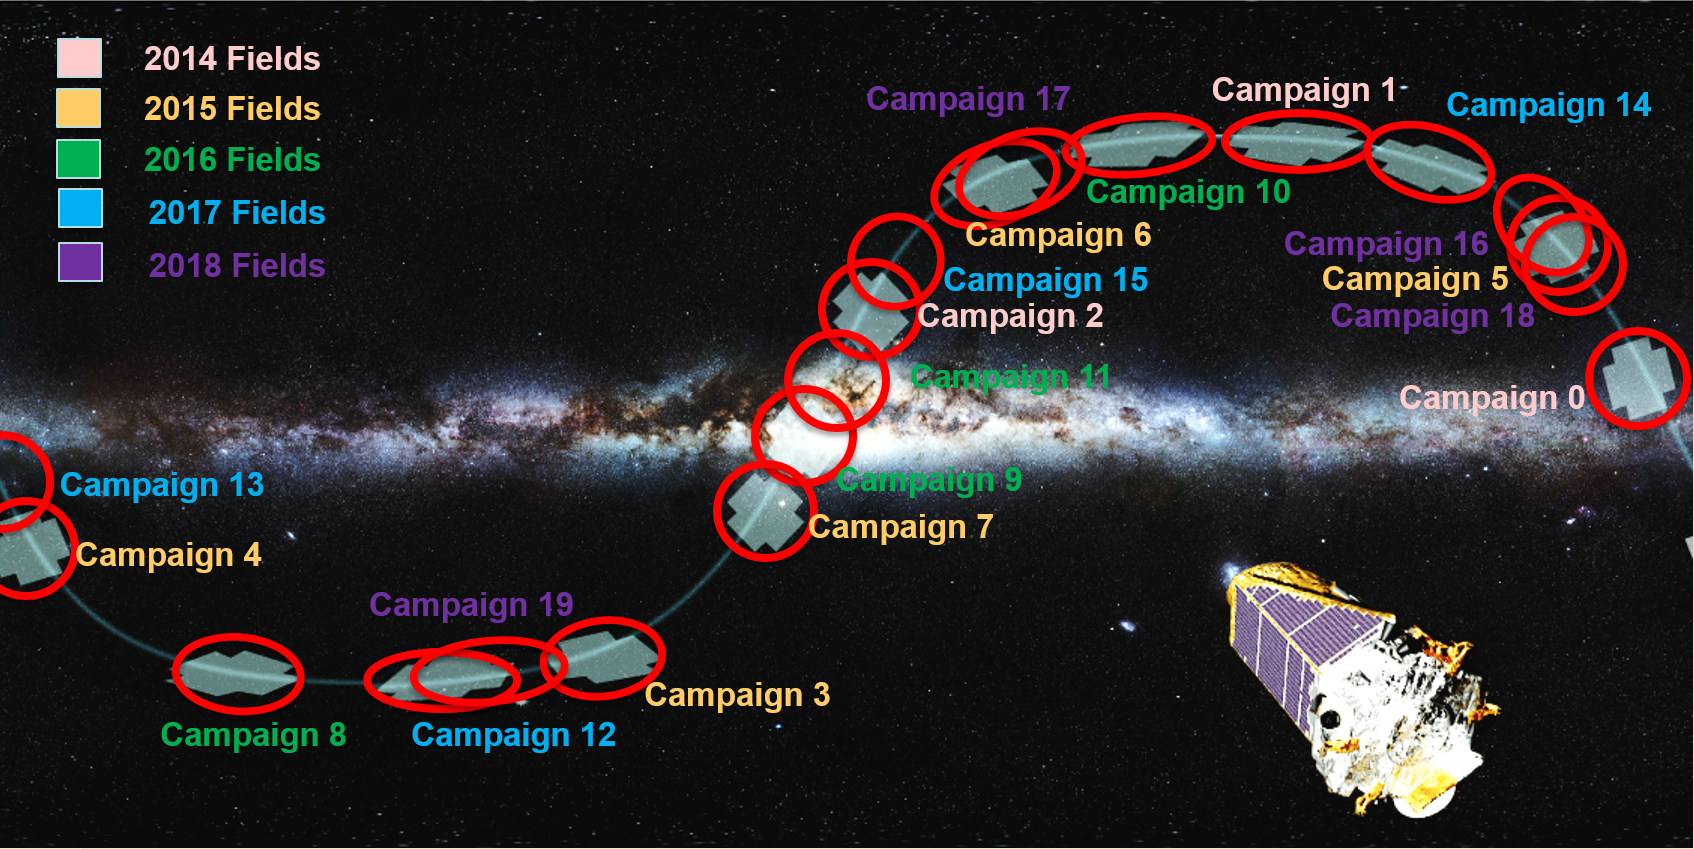 K2 campaigns